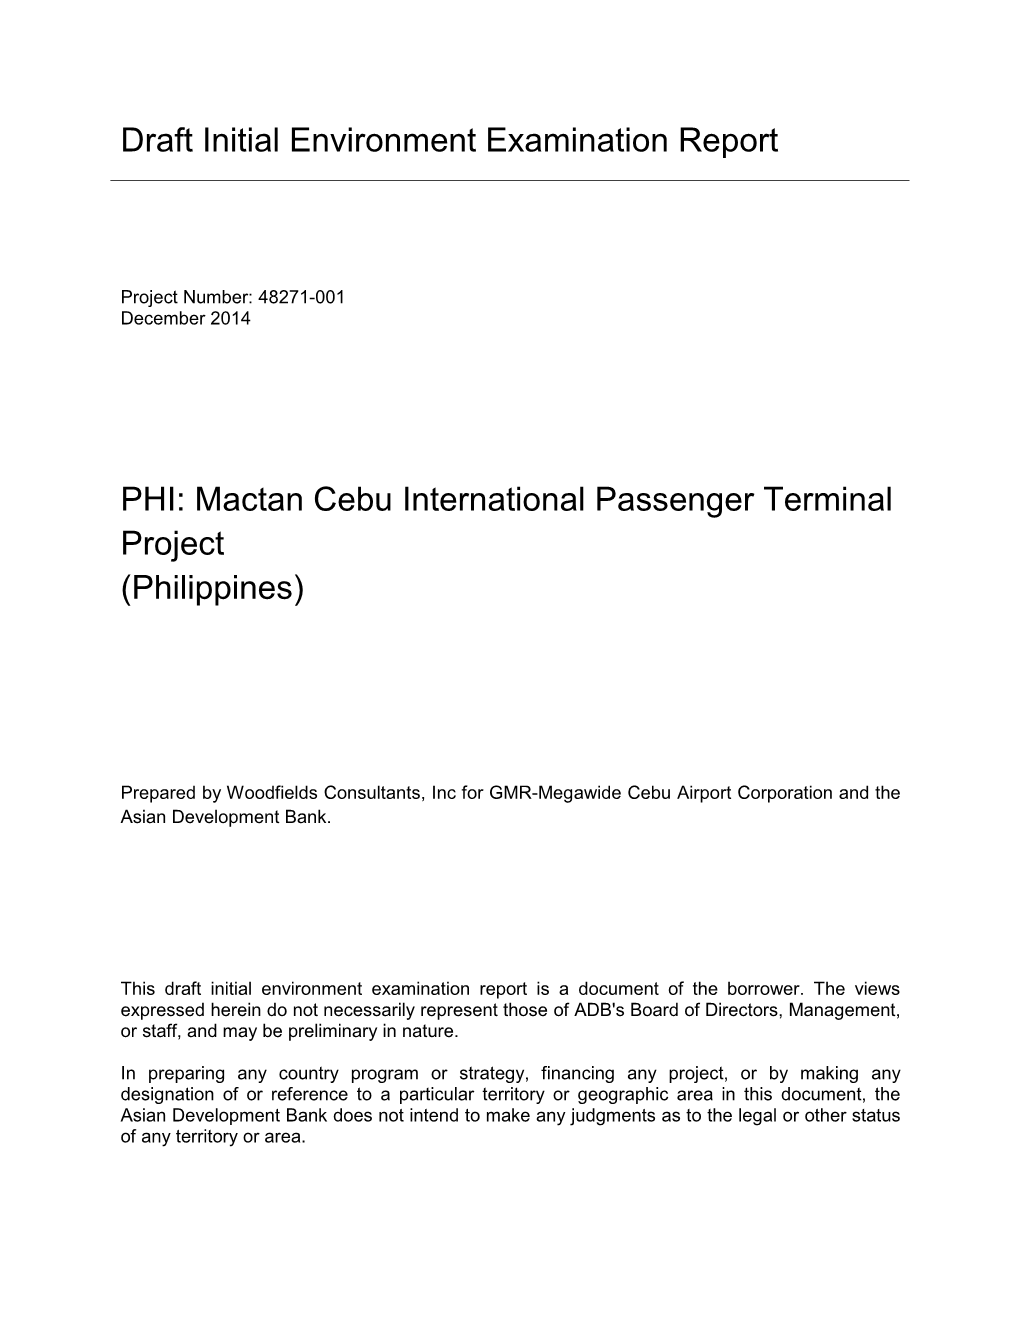 Mactan Cebu International Passenger Terminal Project (Philippines)